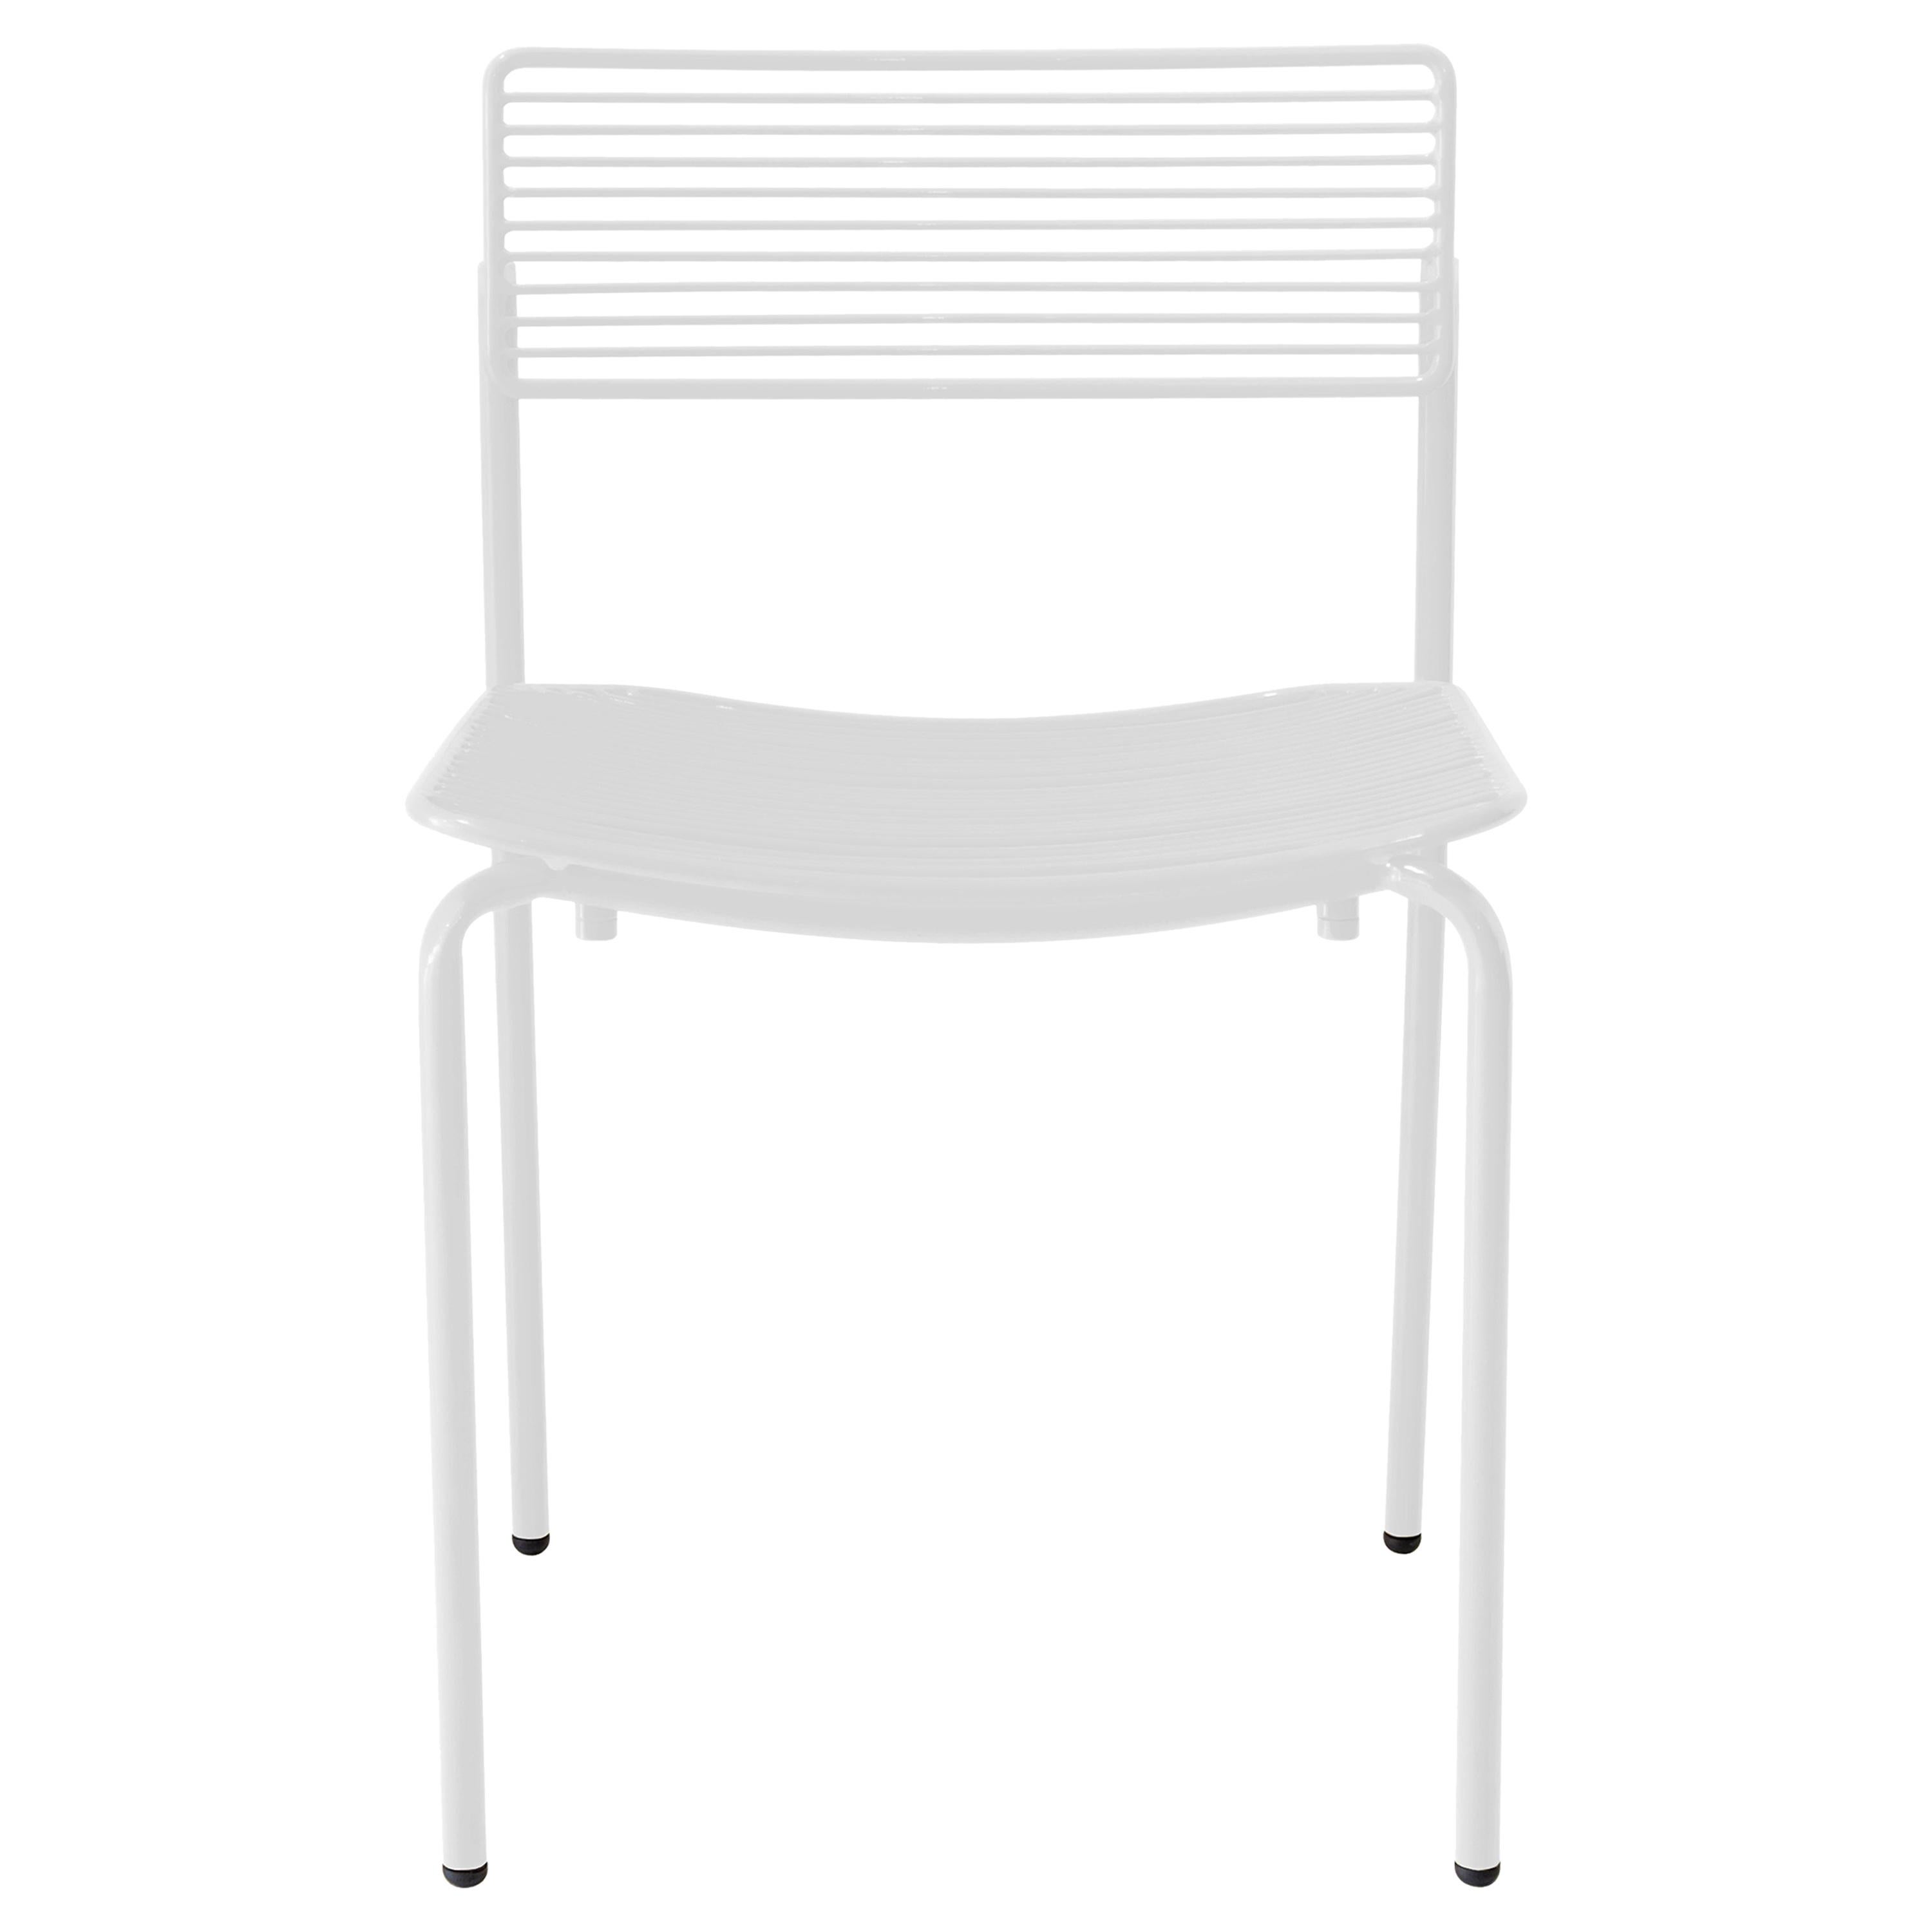 Linear & Modern White Metal Dining Chair